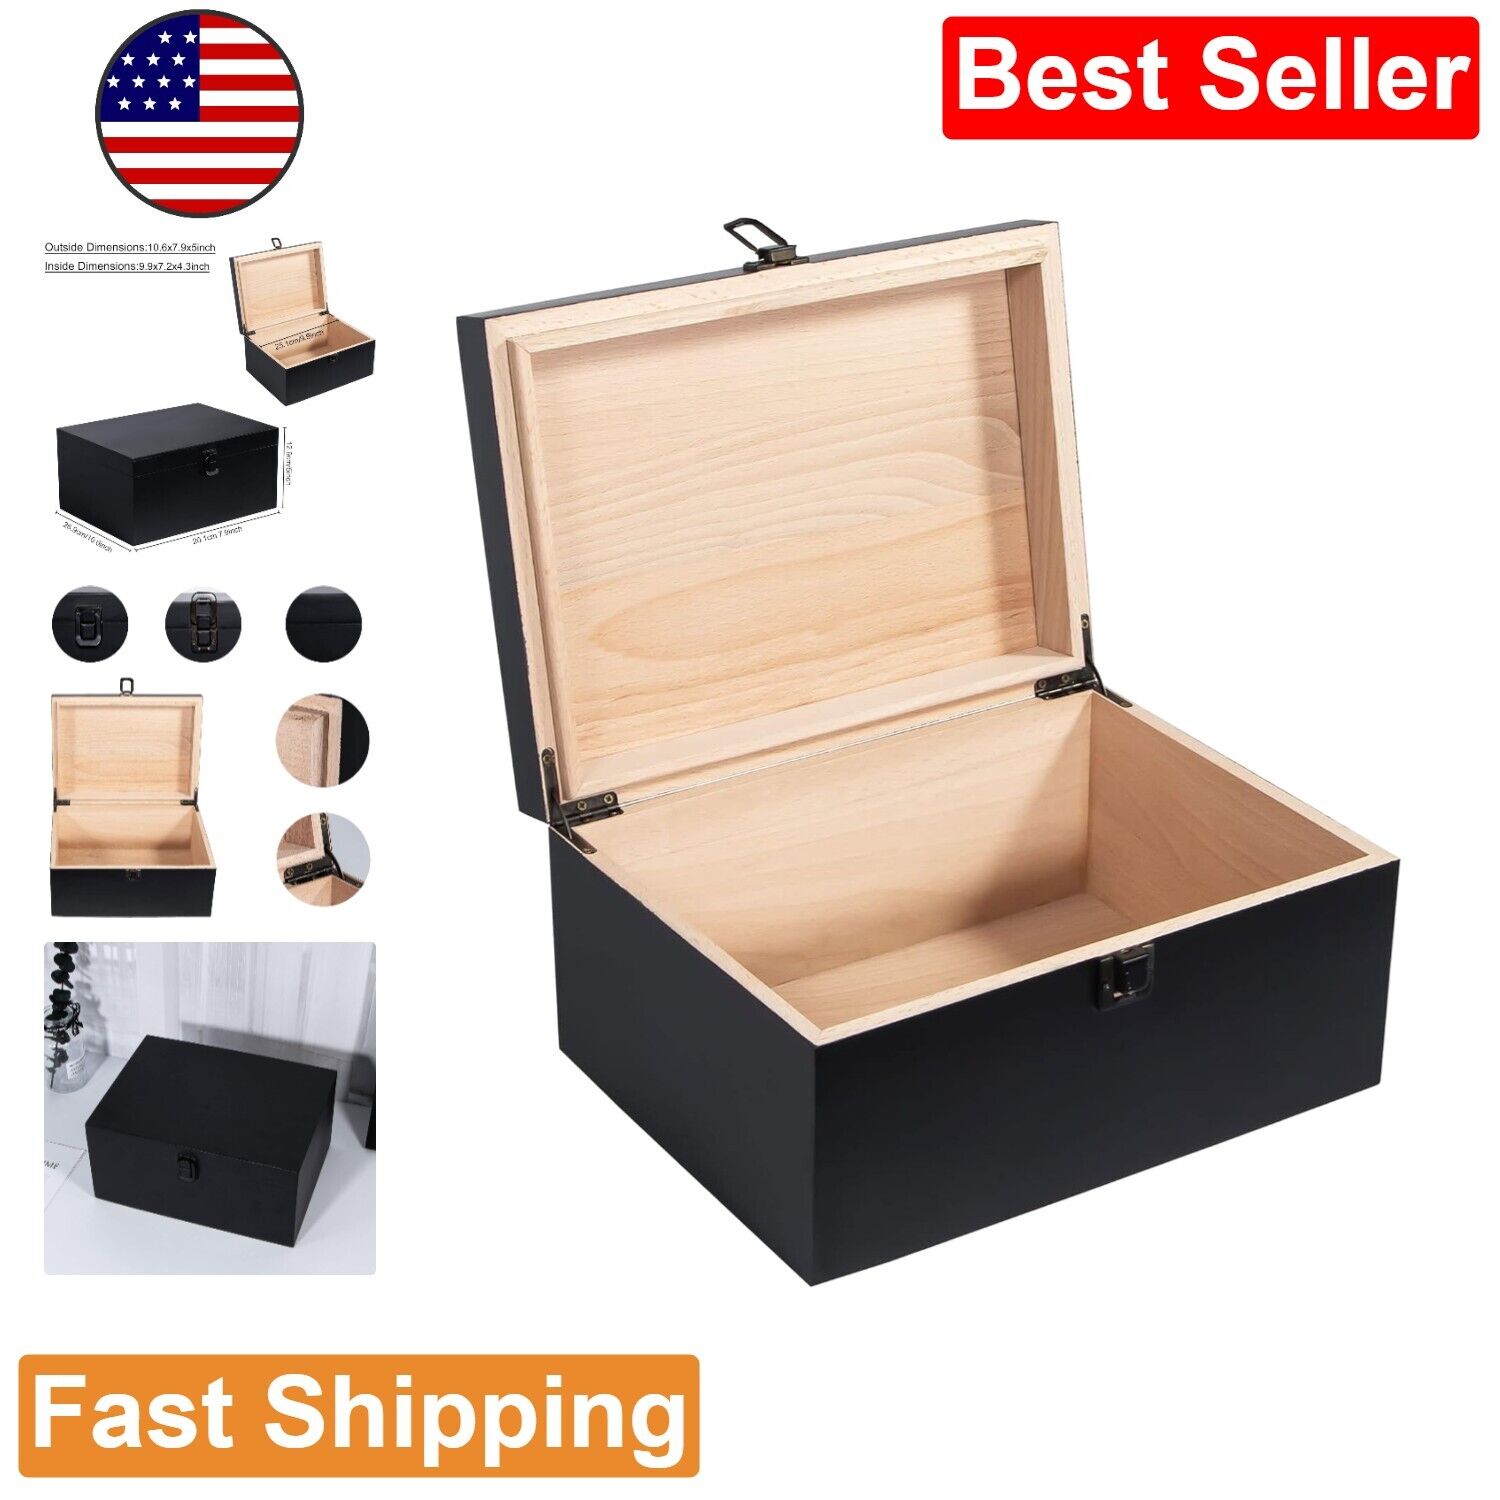 Extra-Large Handmade Wood Craft Box - Versatile Jewelry Gift Storage - Black